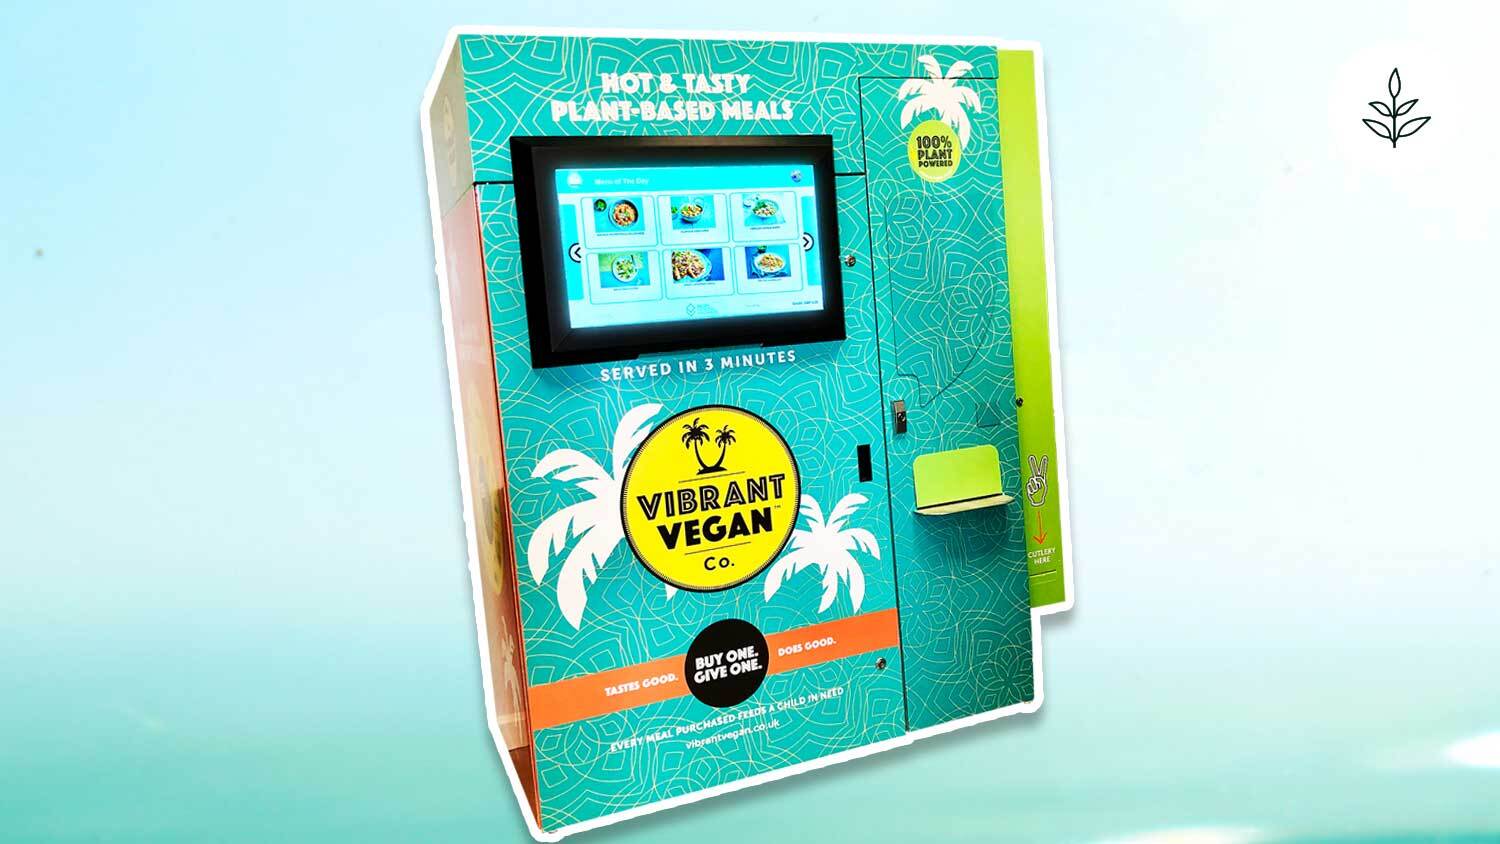 A UK Hospital Now Has a Vegan Vending Machine for Hot Meals